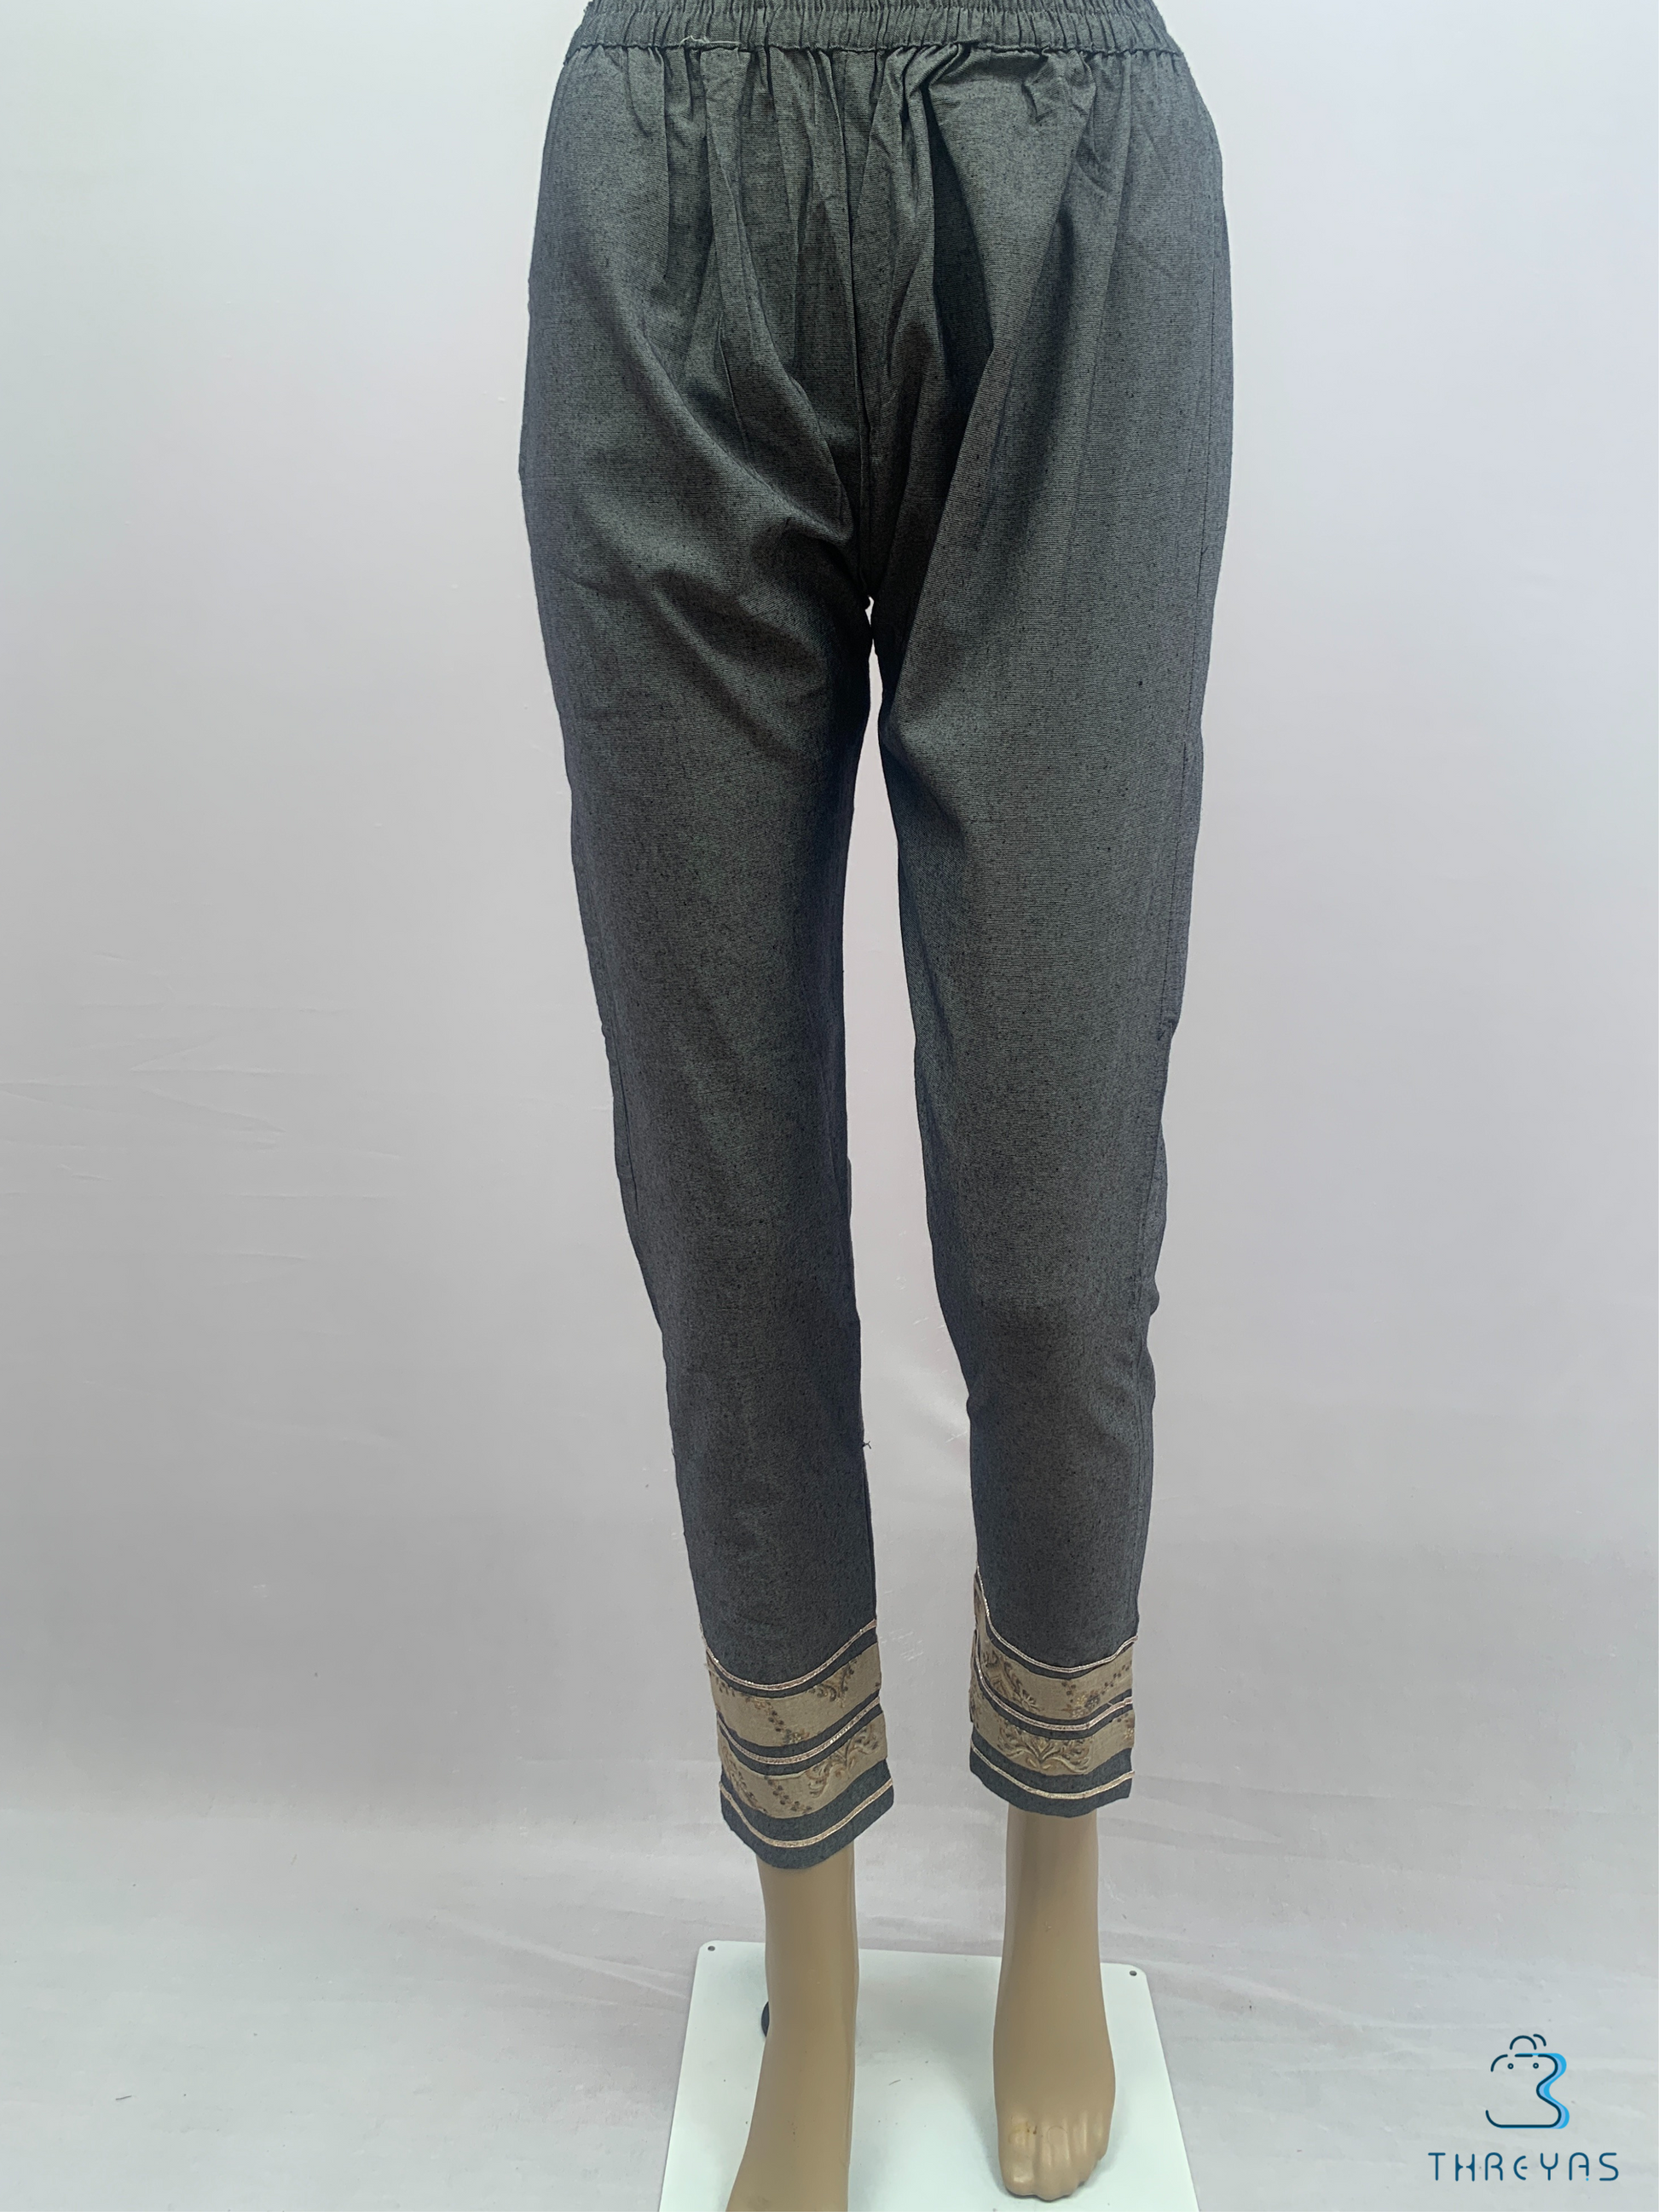 Grey Cotton Kurthis set with straight Pant for women |  Stylish Kurthis & Kurtis Sets for Women |  Threyas 